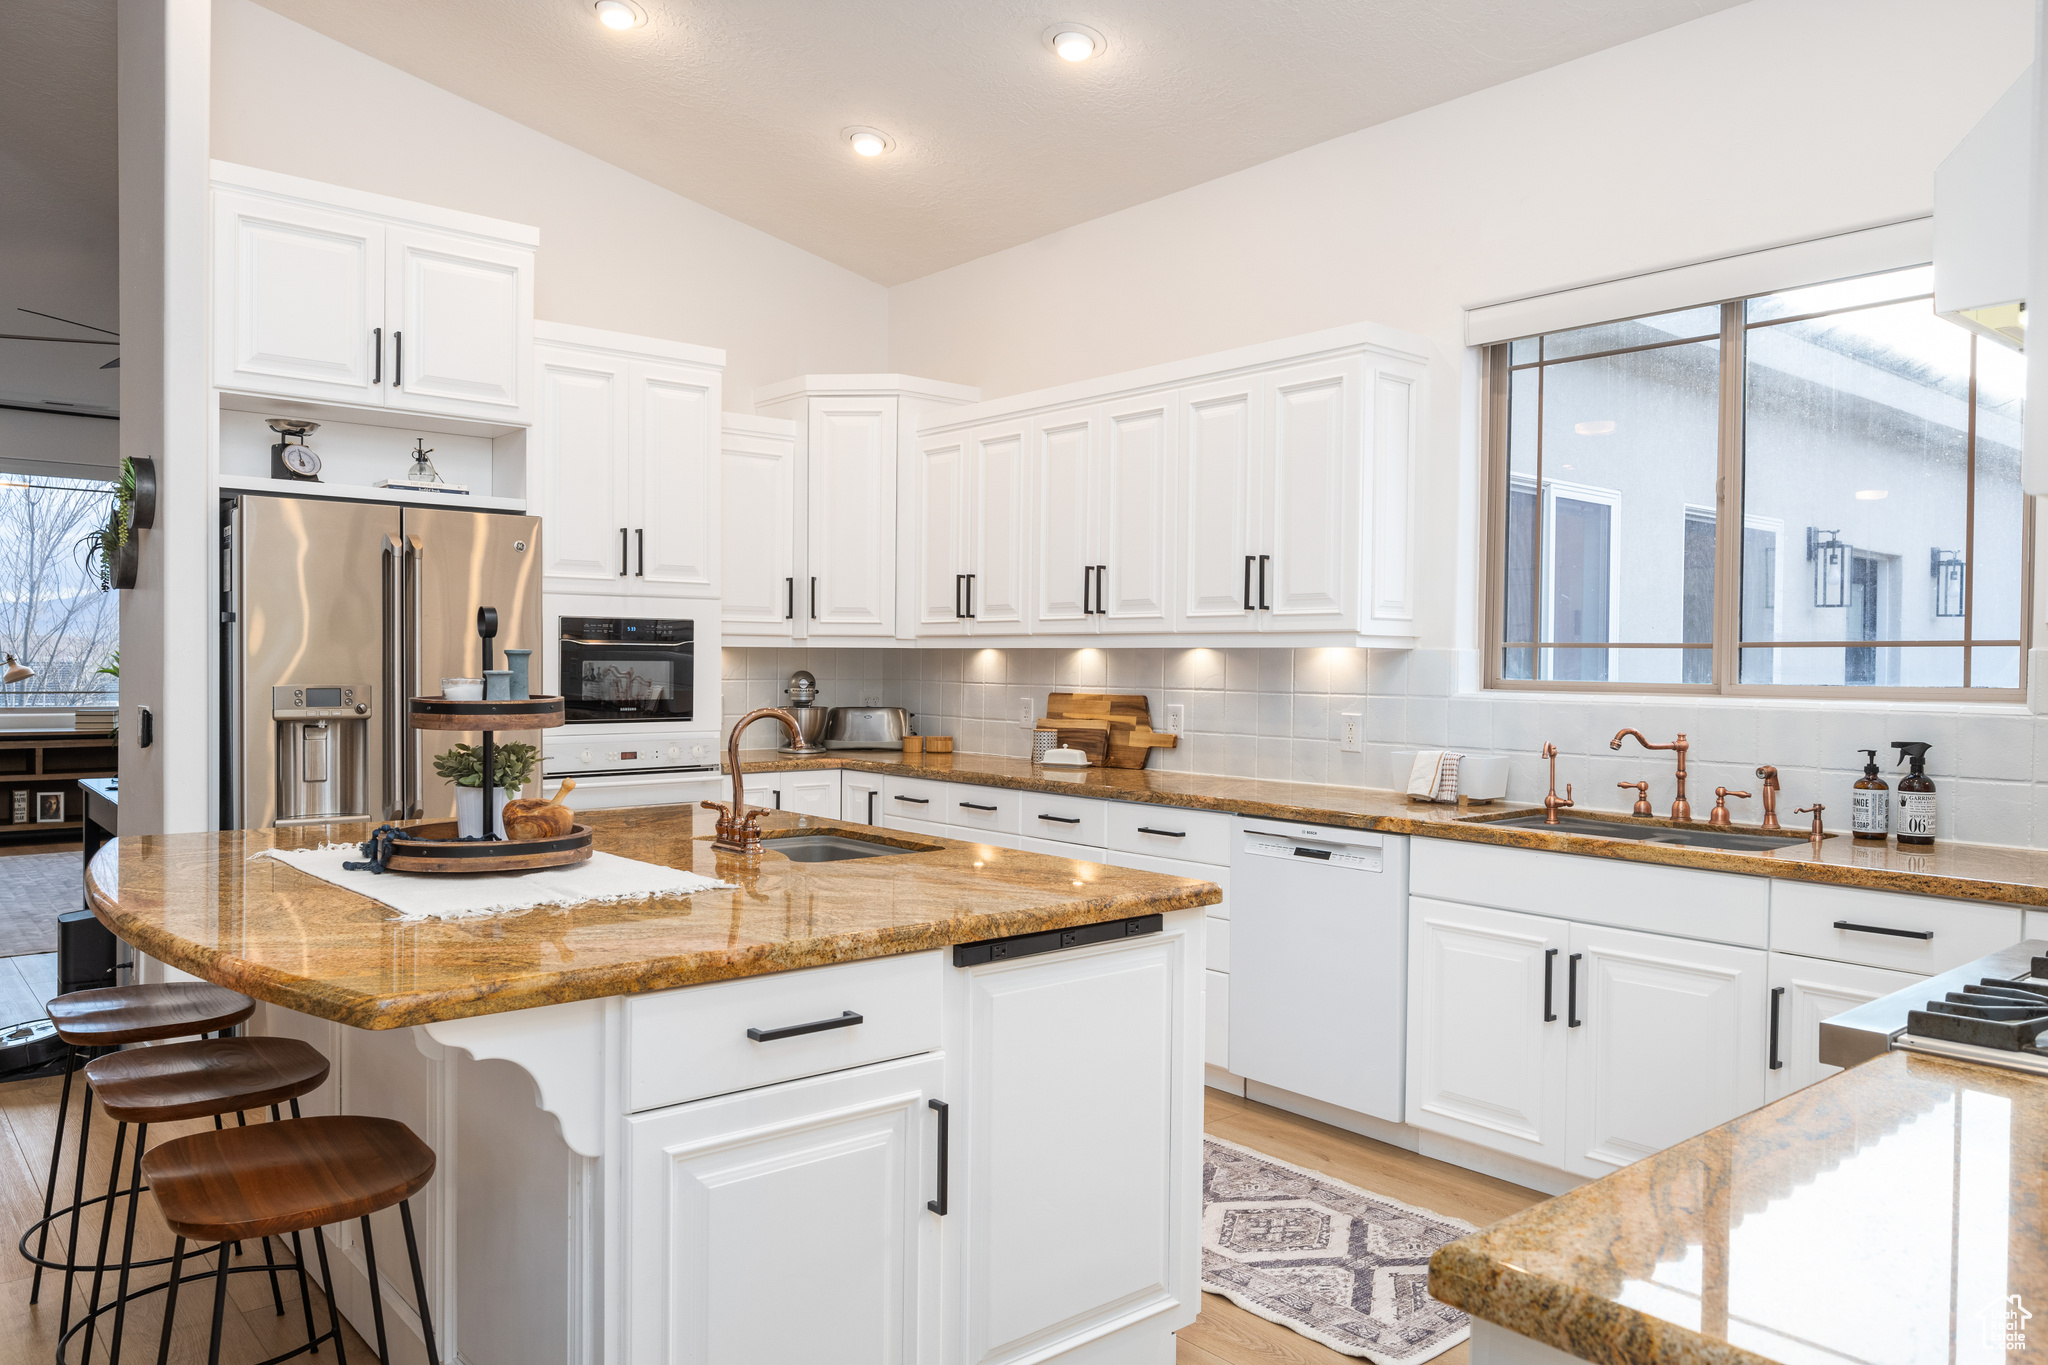 Kitchen featuring dishwasher, a center island with sink, lofted ceiling, high quality fridge, and tasteful backsplash